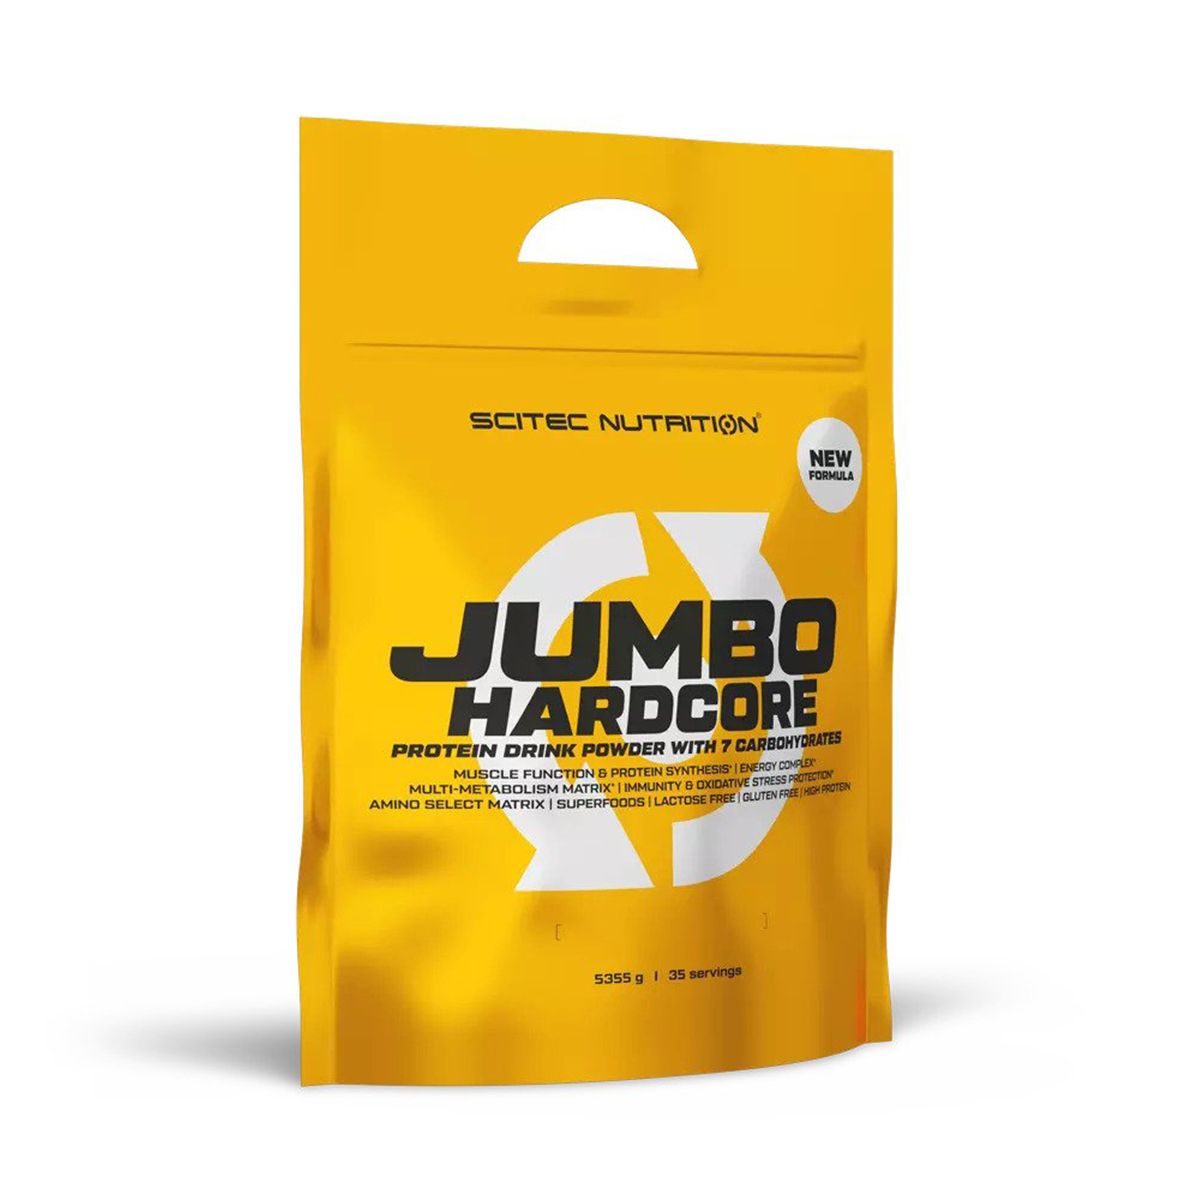 SCITEC NUTRITION - JUMBO HARDCORE - 5355 G 